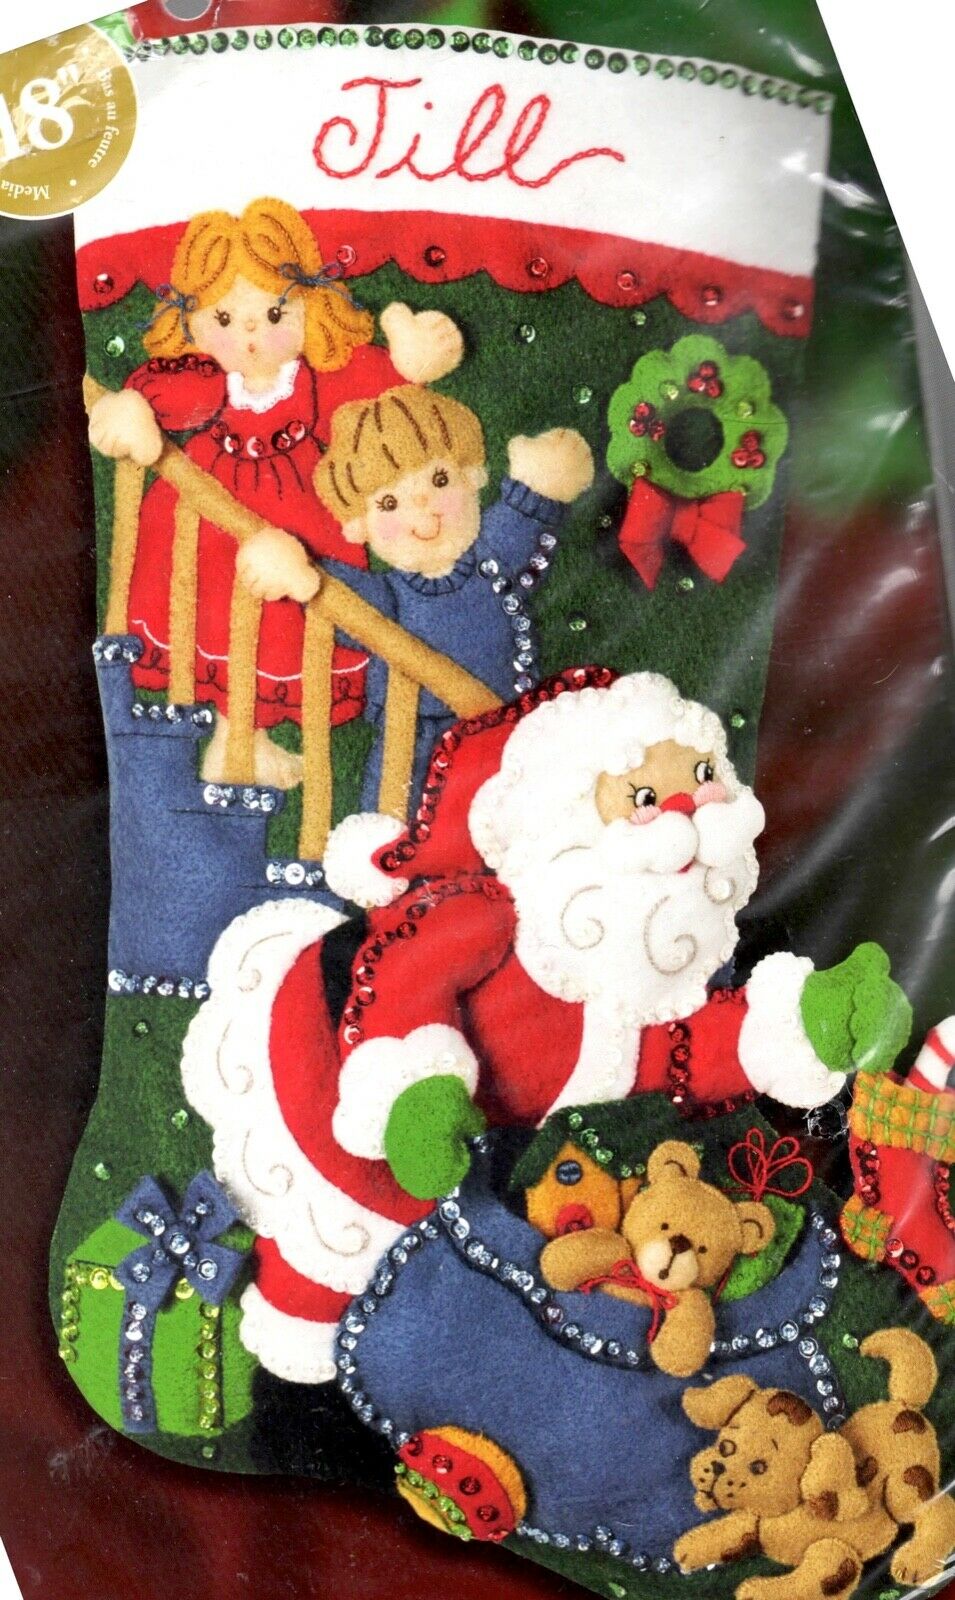 DIY Bucilla No Peeking Santa Christmas Eve Toys Holiday Felt Stocking Kit 85268